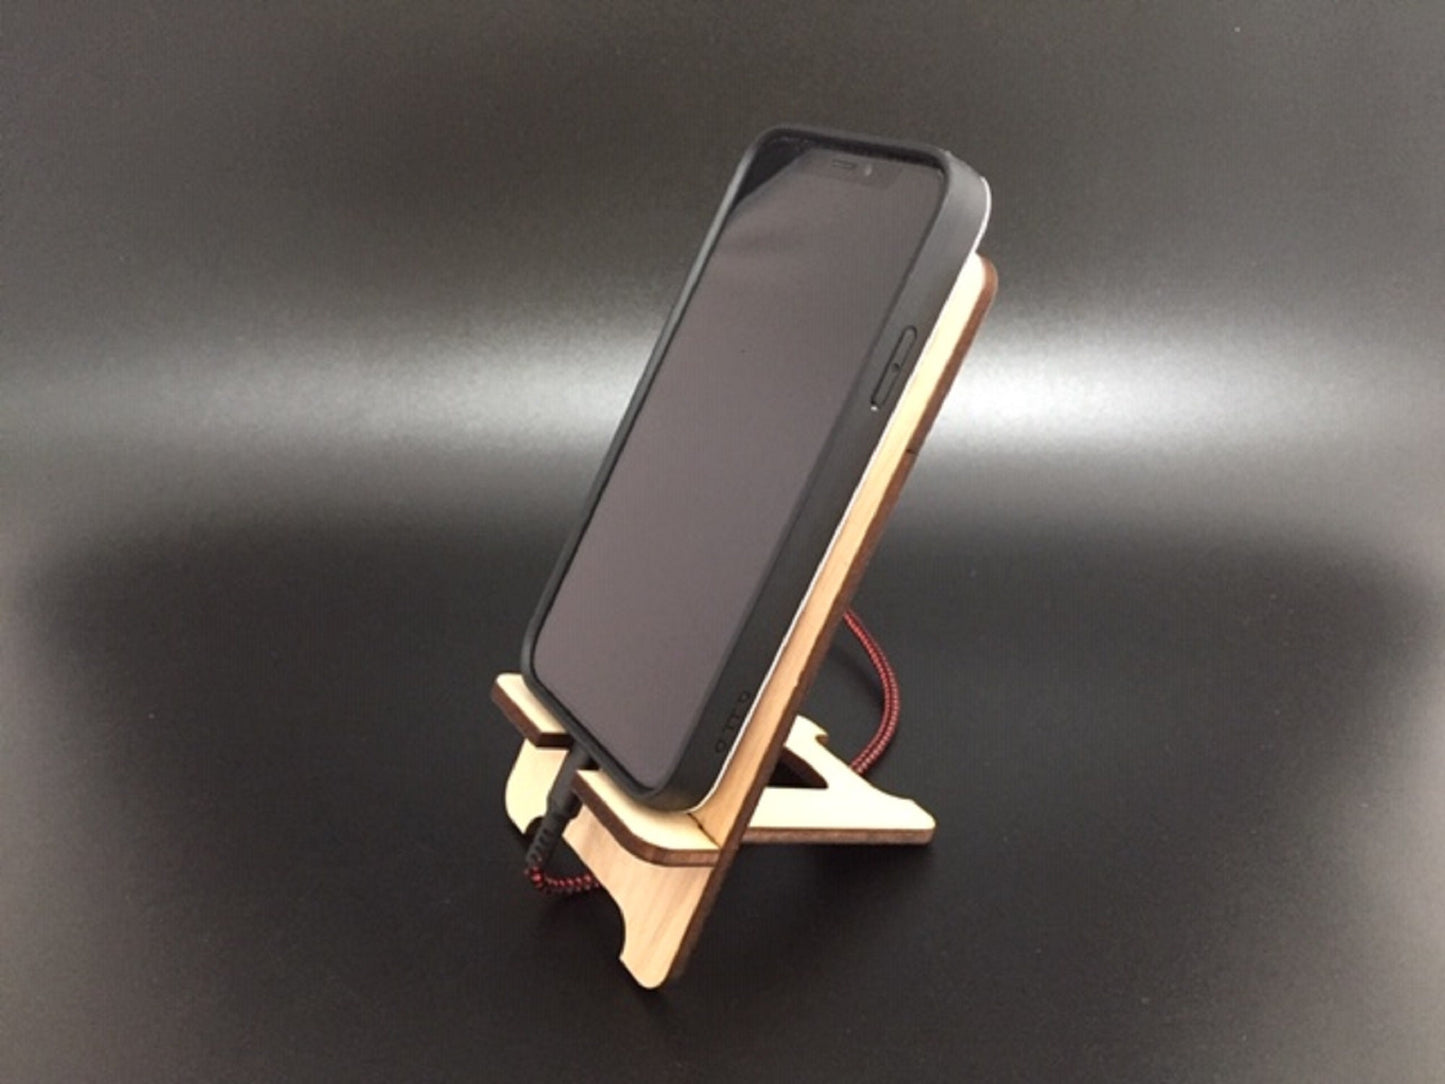 Pineapple Wooden Phone Stand | Customized Smartphone Holder | Personalized Docking Station | Stocking Stuffer, Birthday Gift, Desk Organizer